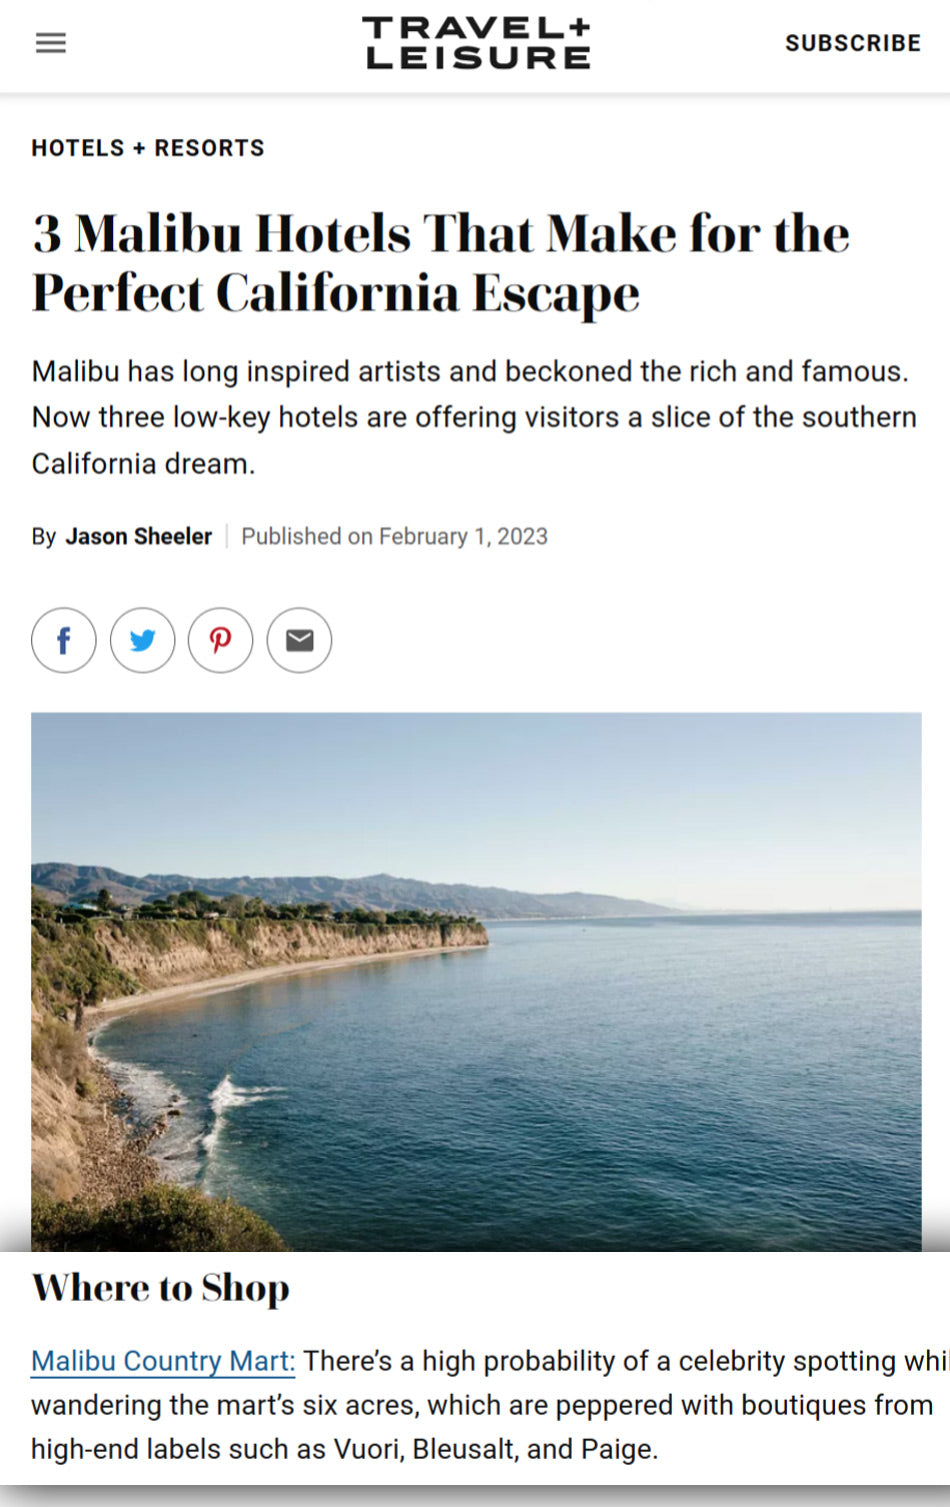 3 Malibu Hotels that make for the Perfect California Escape